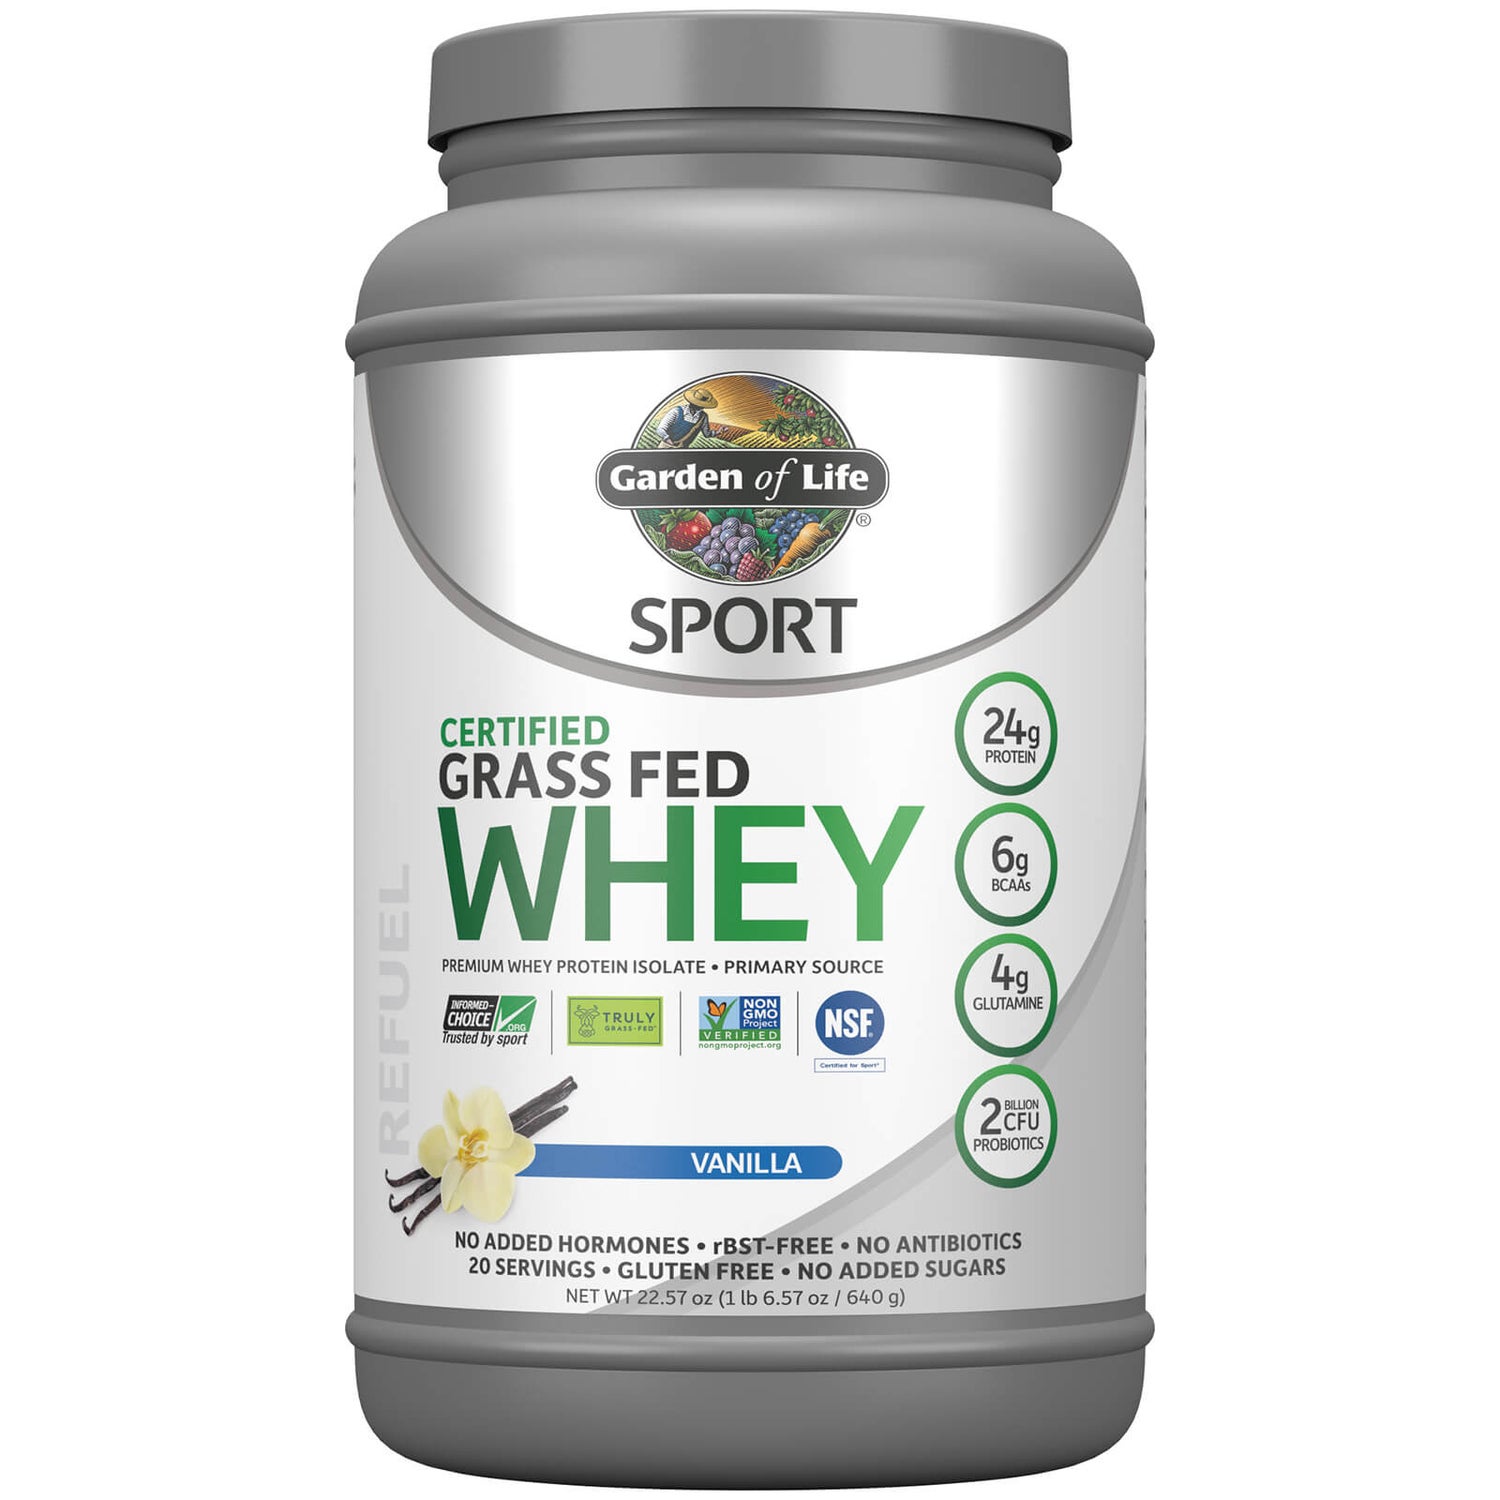 Sport Grass Fed Whey - Vanilla - 640g